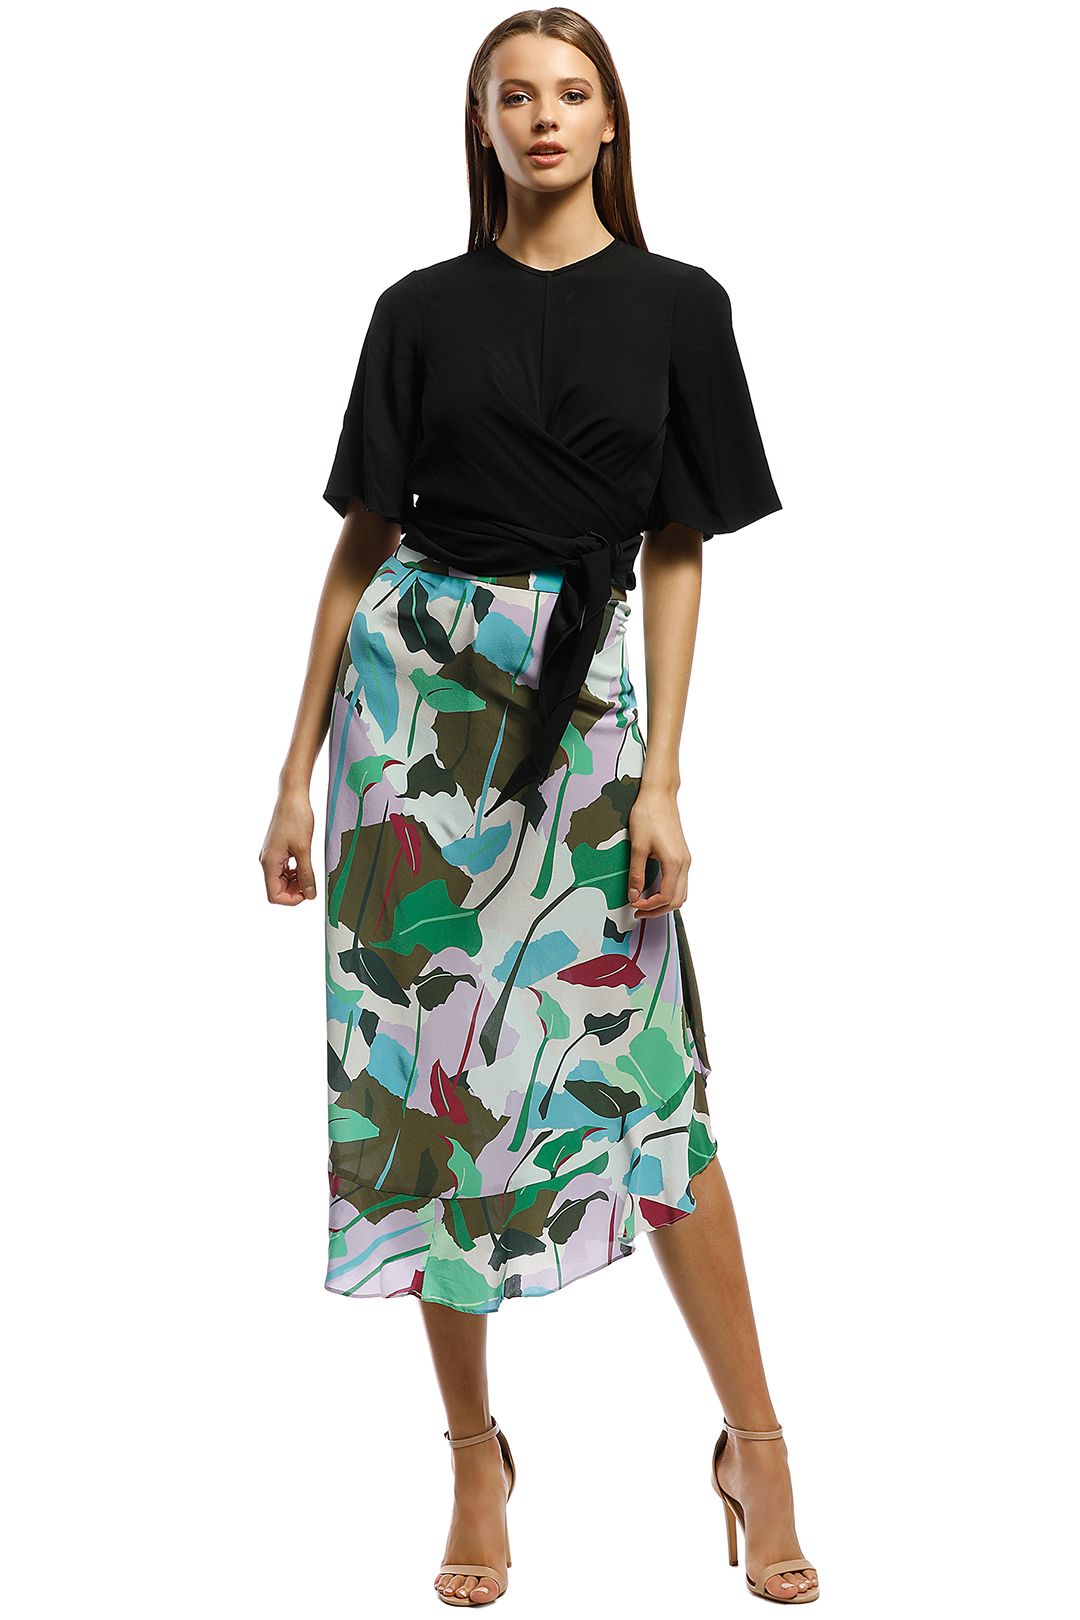 Gorman - Philodendron Silk Skirt - Multi - Front